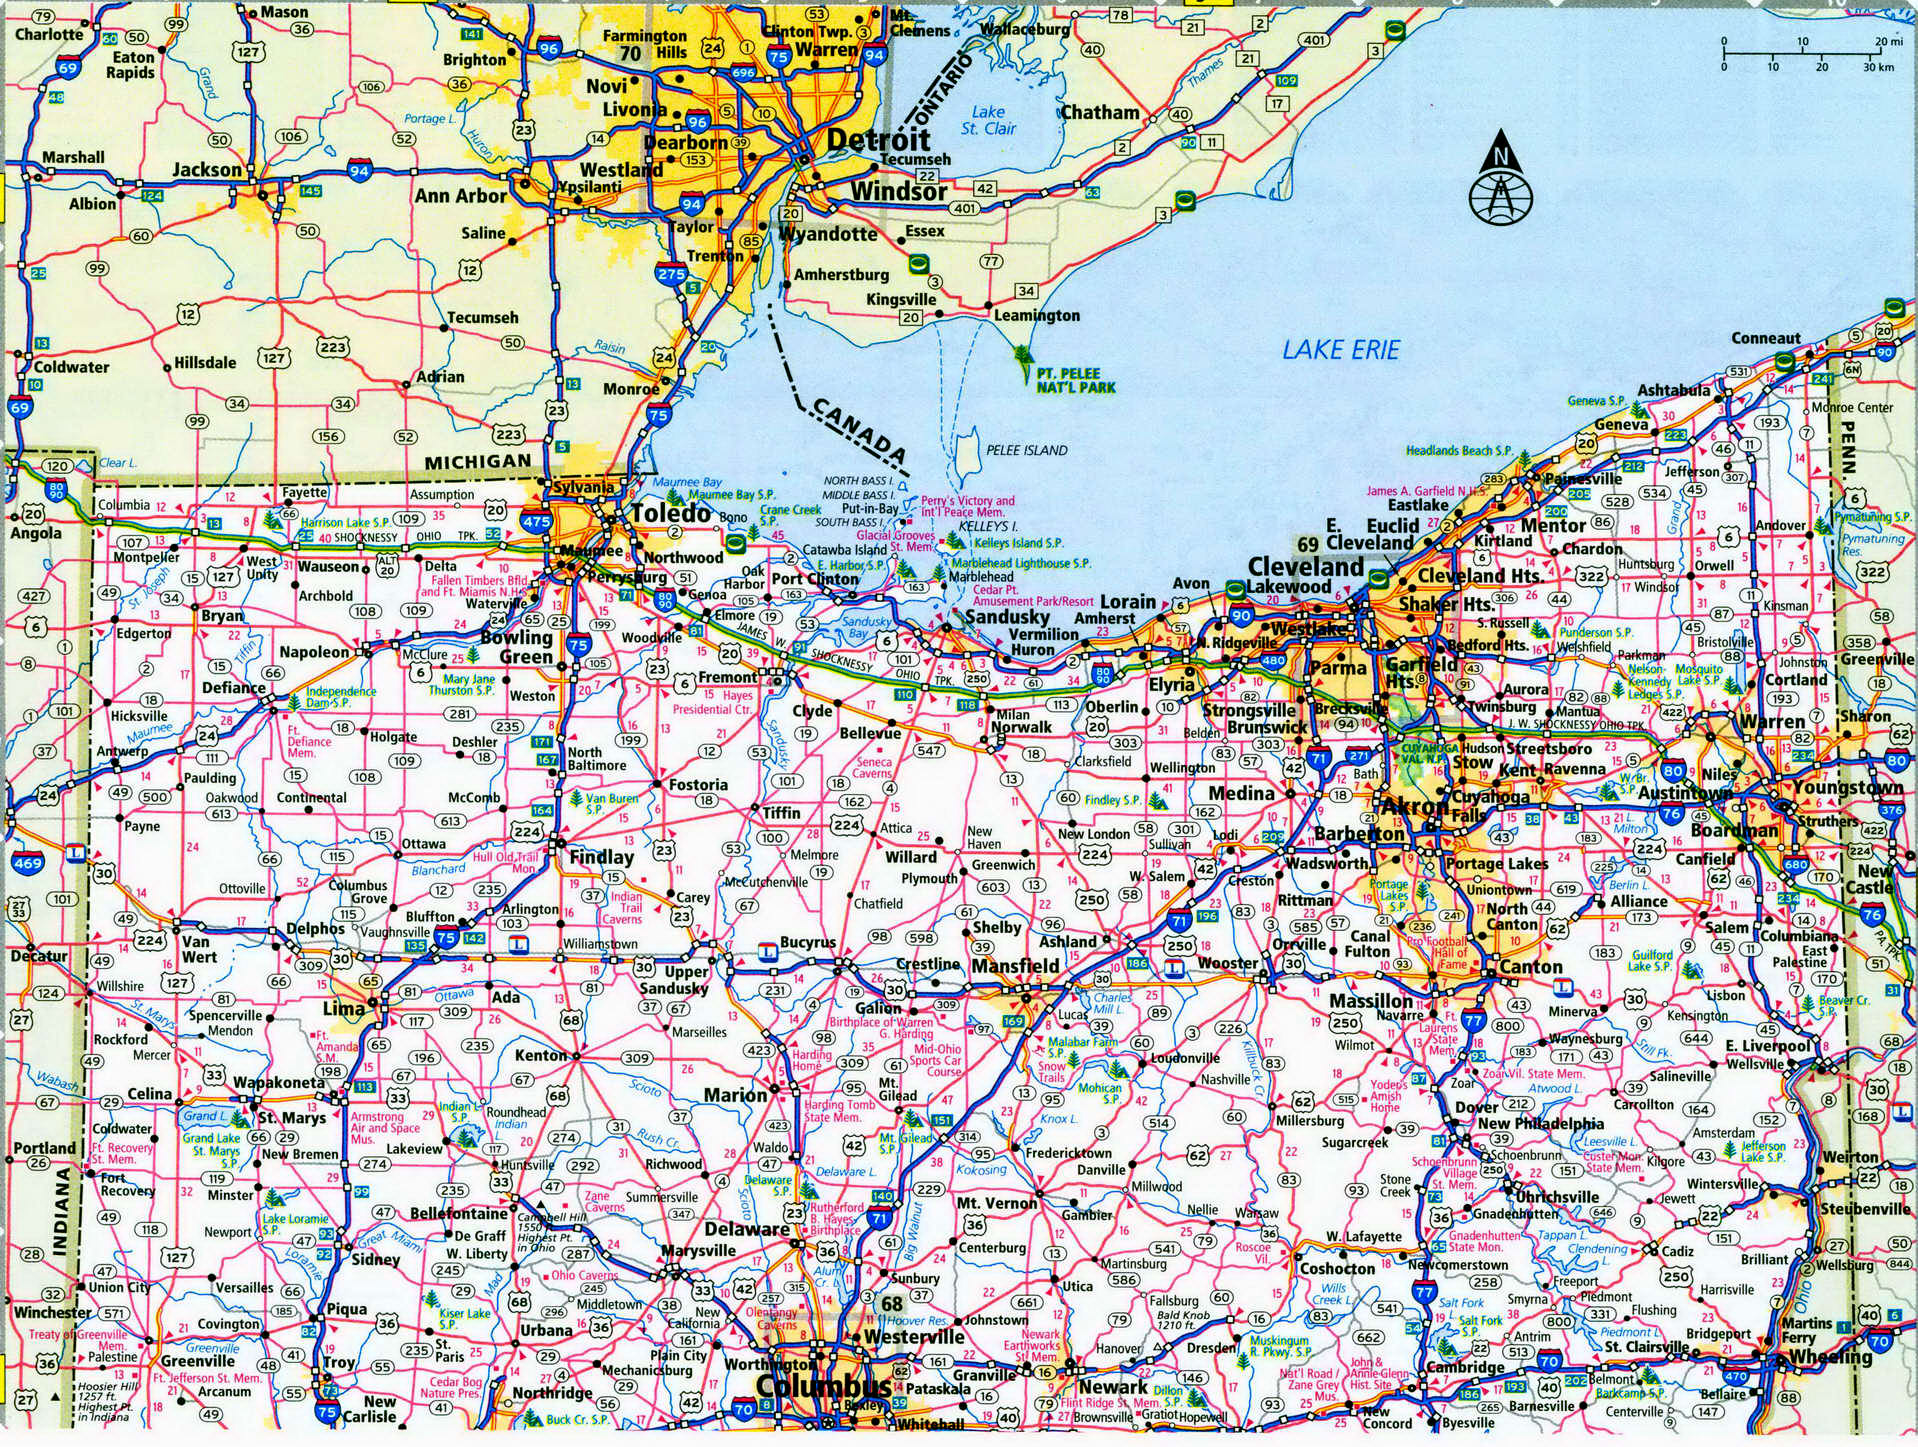 Ohio interstate highway map I-70 I-71 I-75 I-76 I-77 I-80 free road map ...